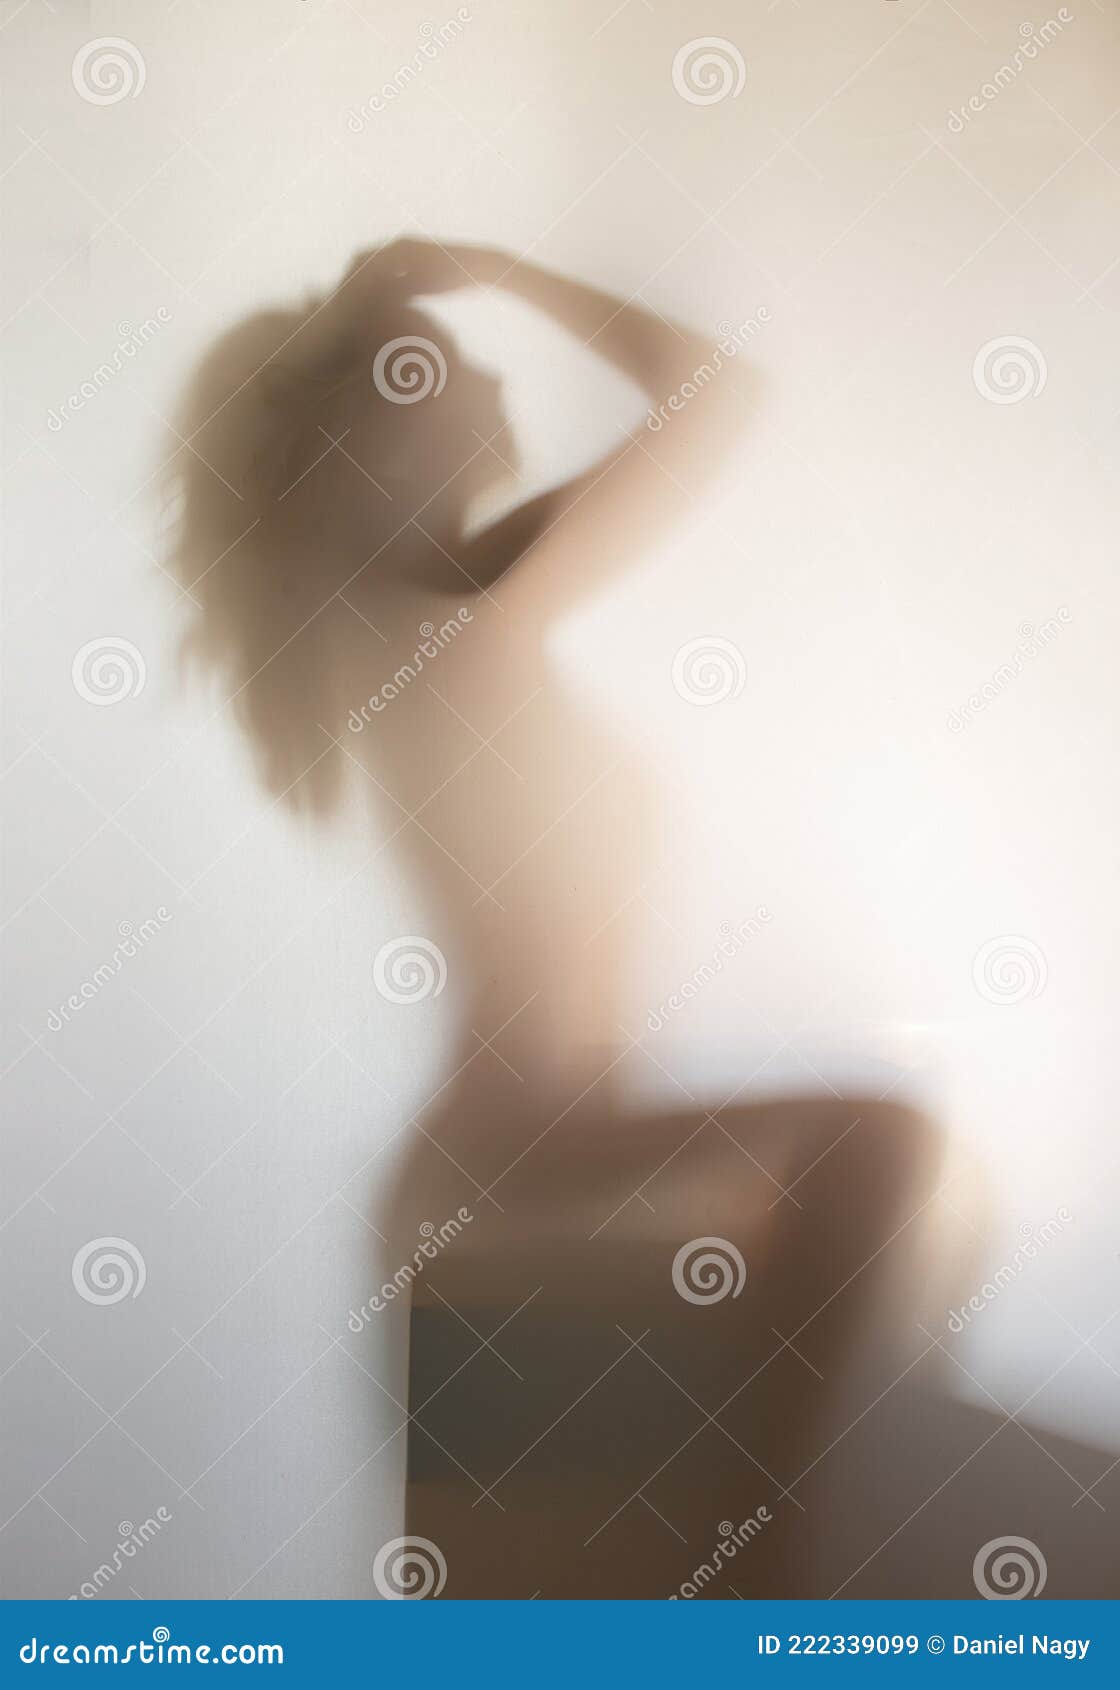 Erotic tits on blurred glass